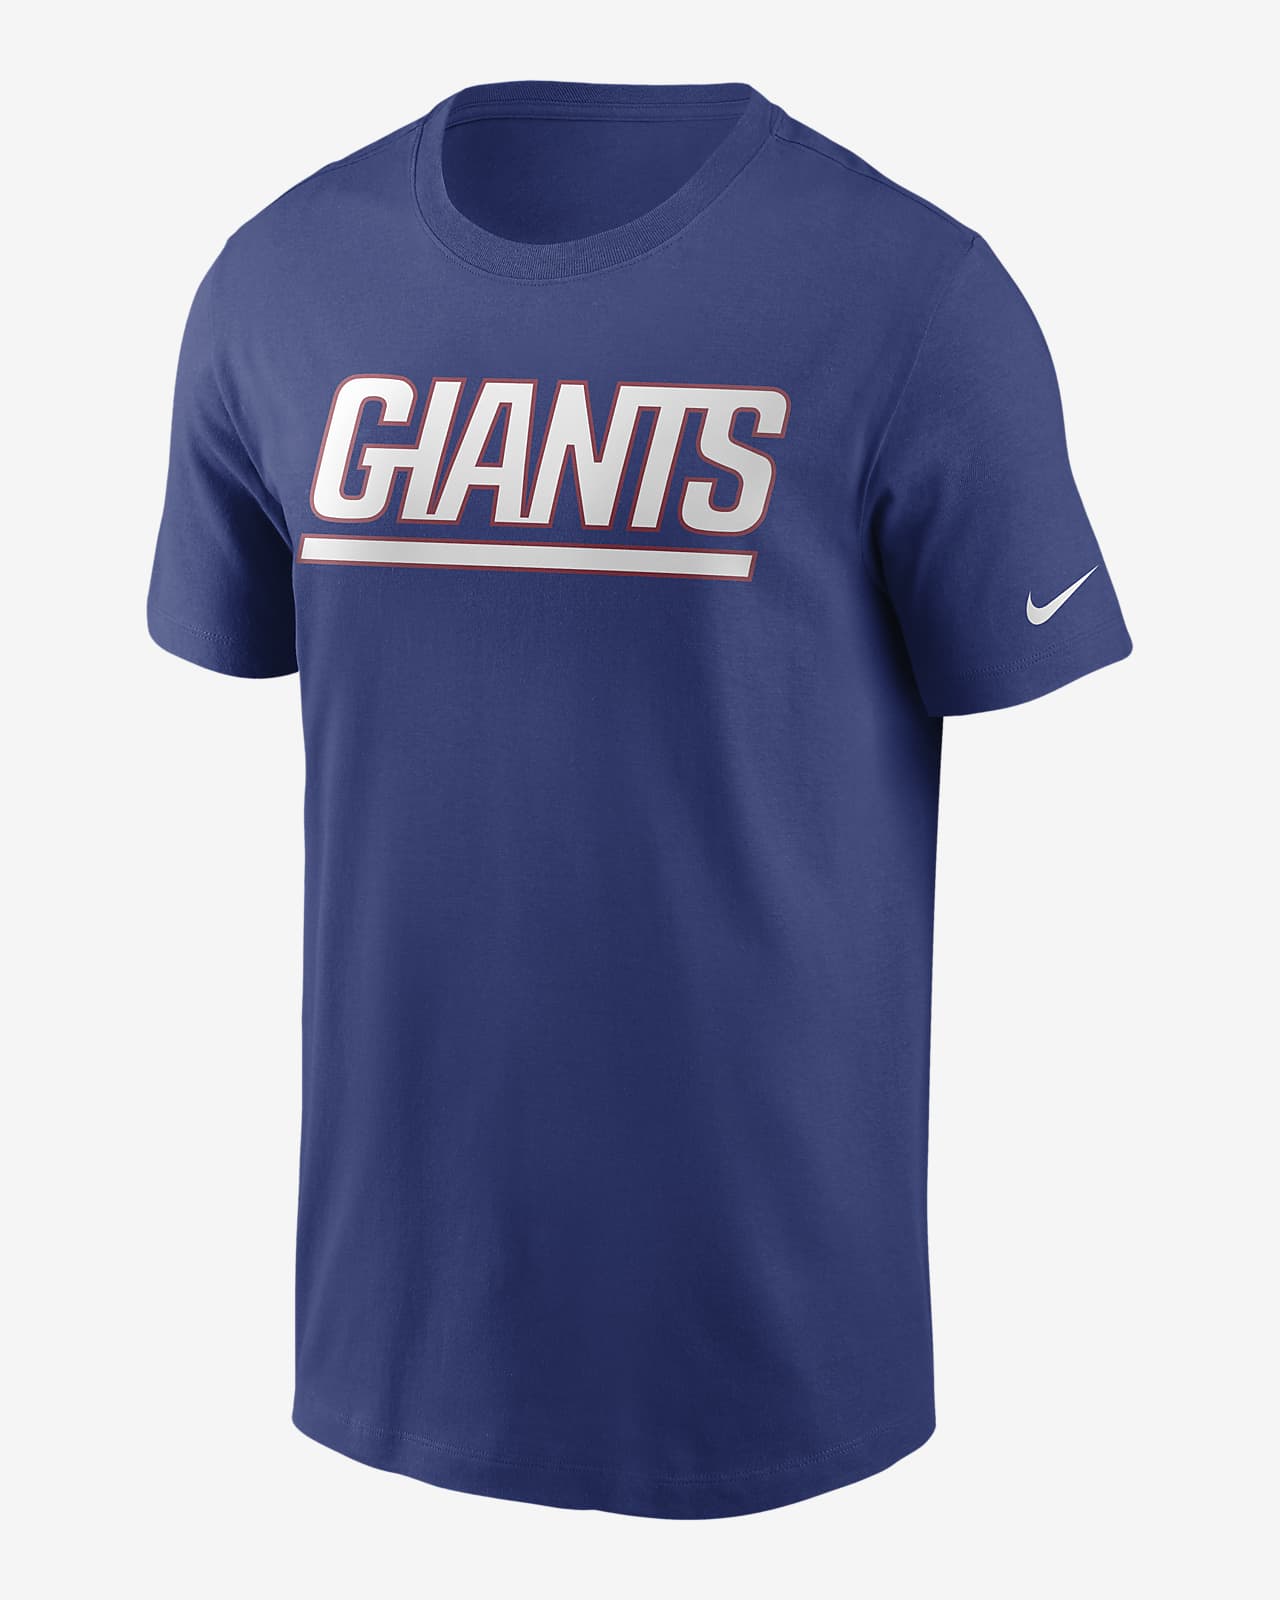 Nike (NFL Giants) Men's T-Shirt. Nike.com